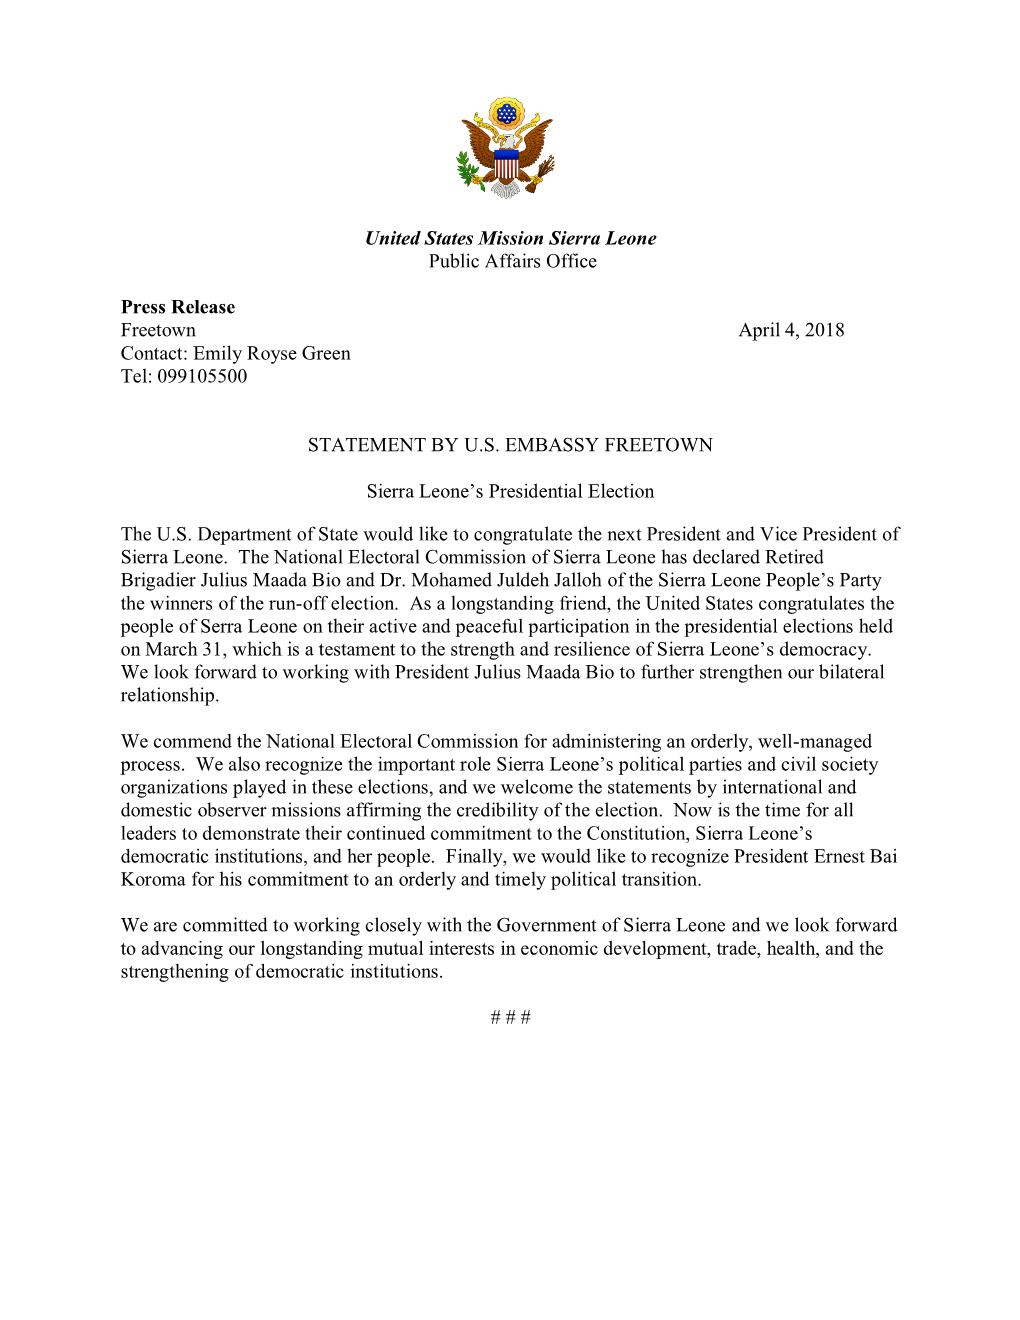 Press Release Siera Leone Election Statement from U.S. Embassy